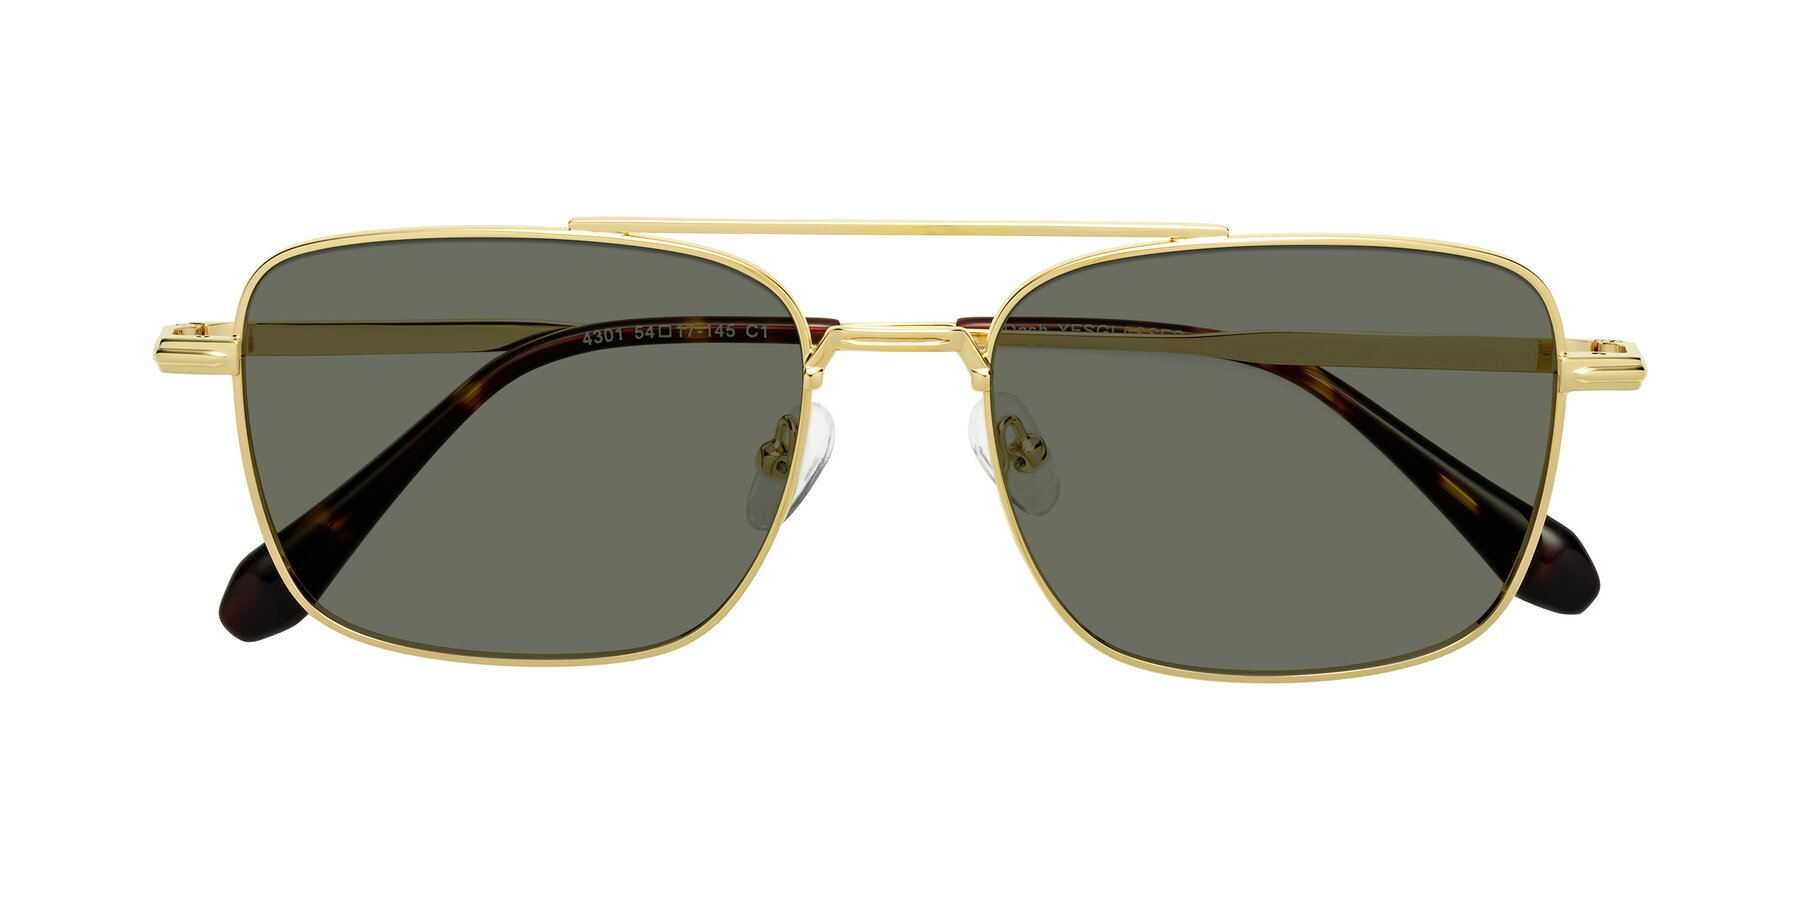 Gold Grandpa Sunglasses with Polarized Double Dash Metal - Bridge Gray Lenses Sunwear